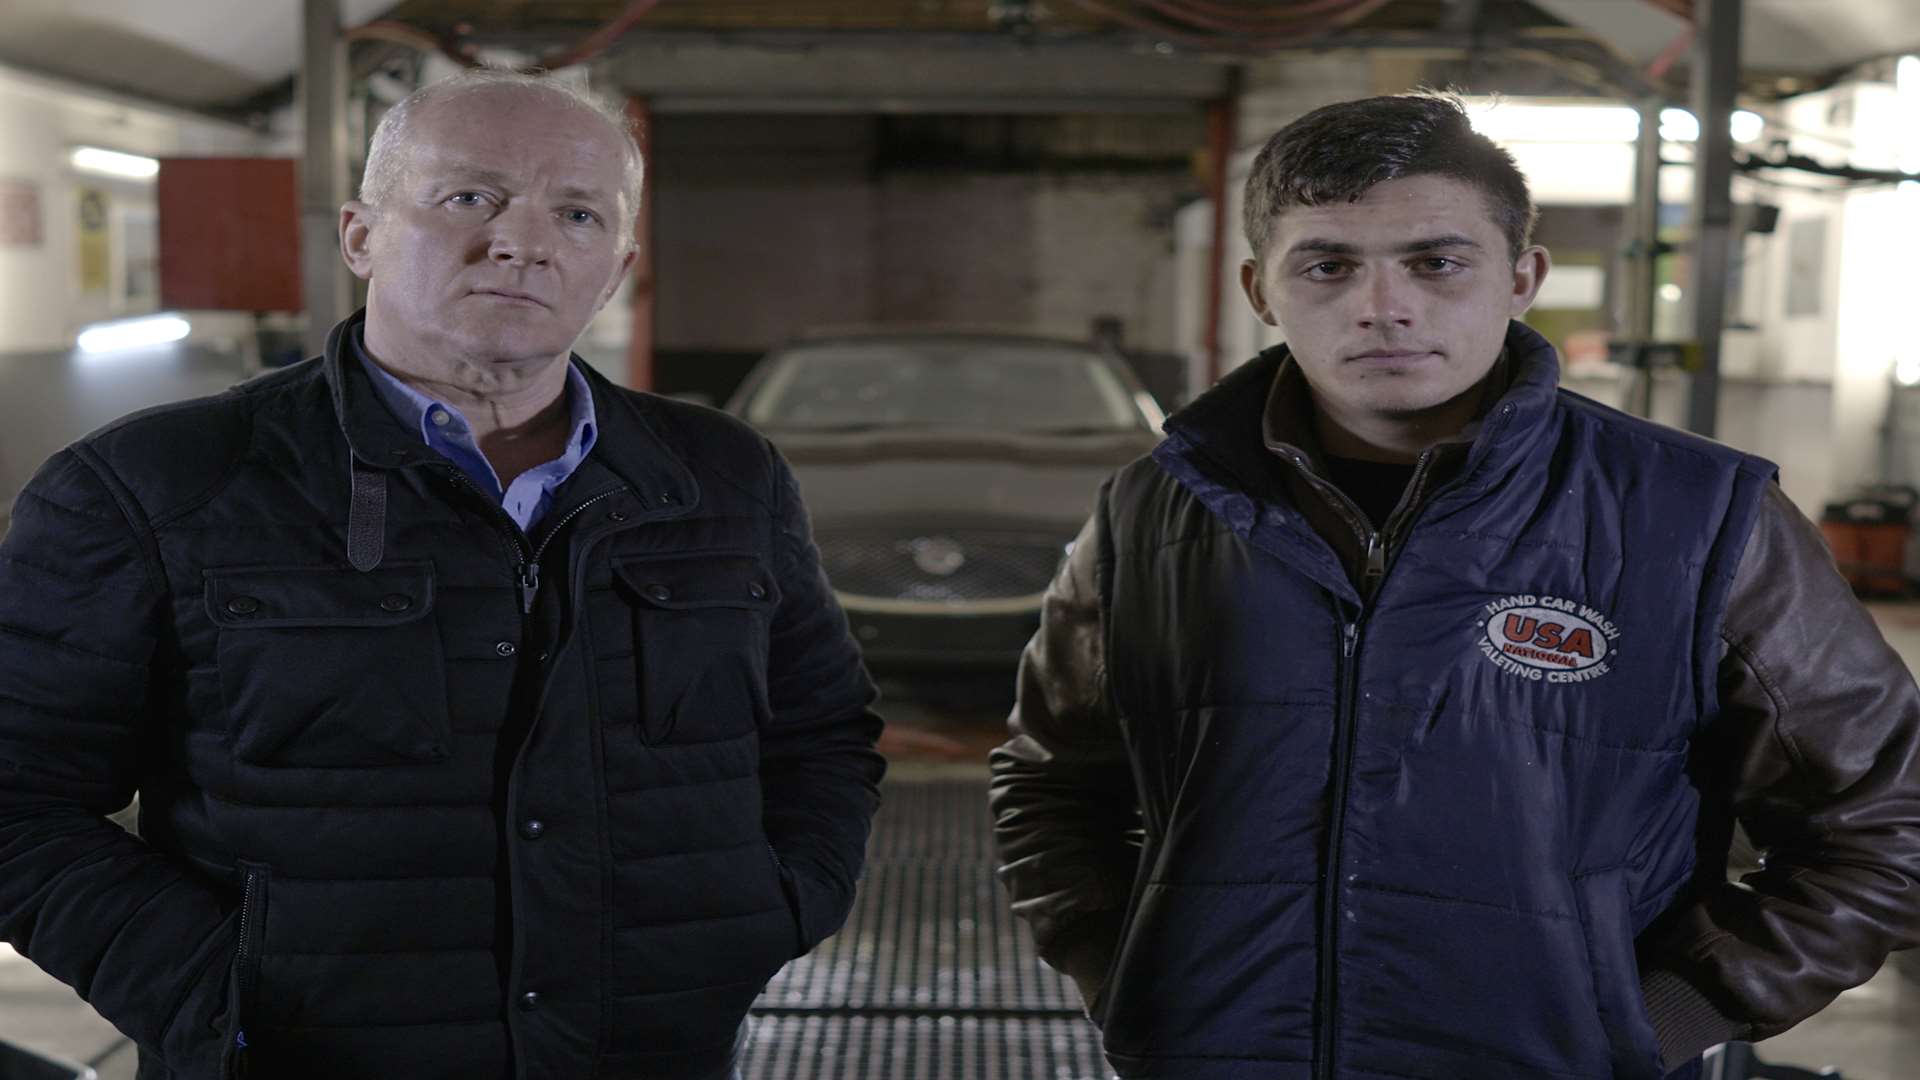 Al Jazeera reporter David Harrison with Claudio, who filmed at the USA Car Wash undercover. Picture: Al Jazeera